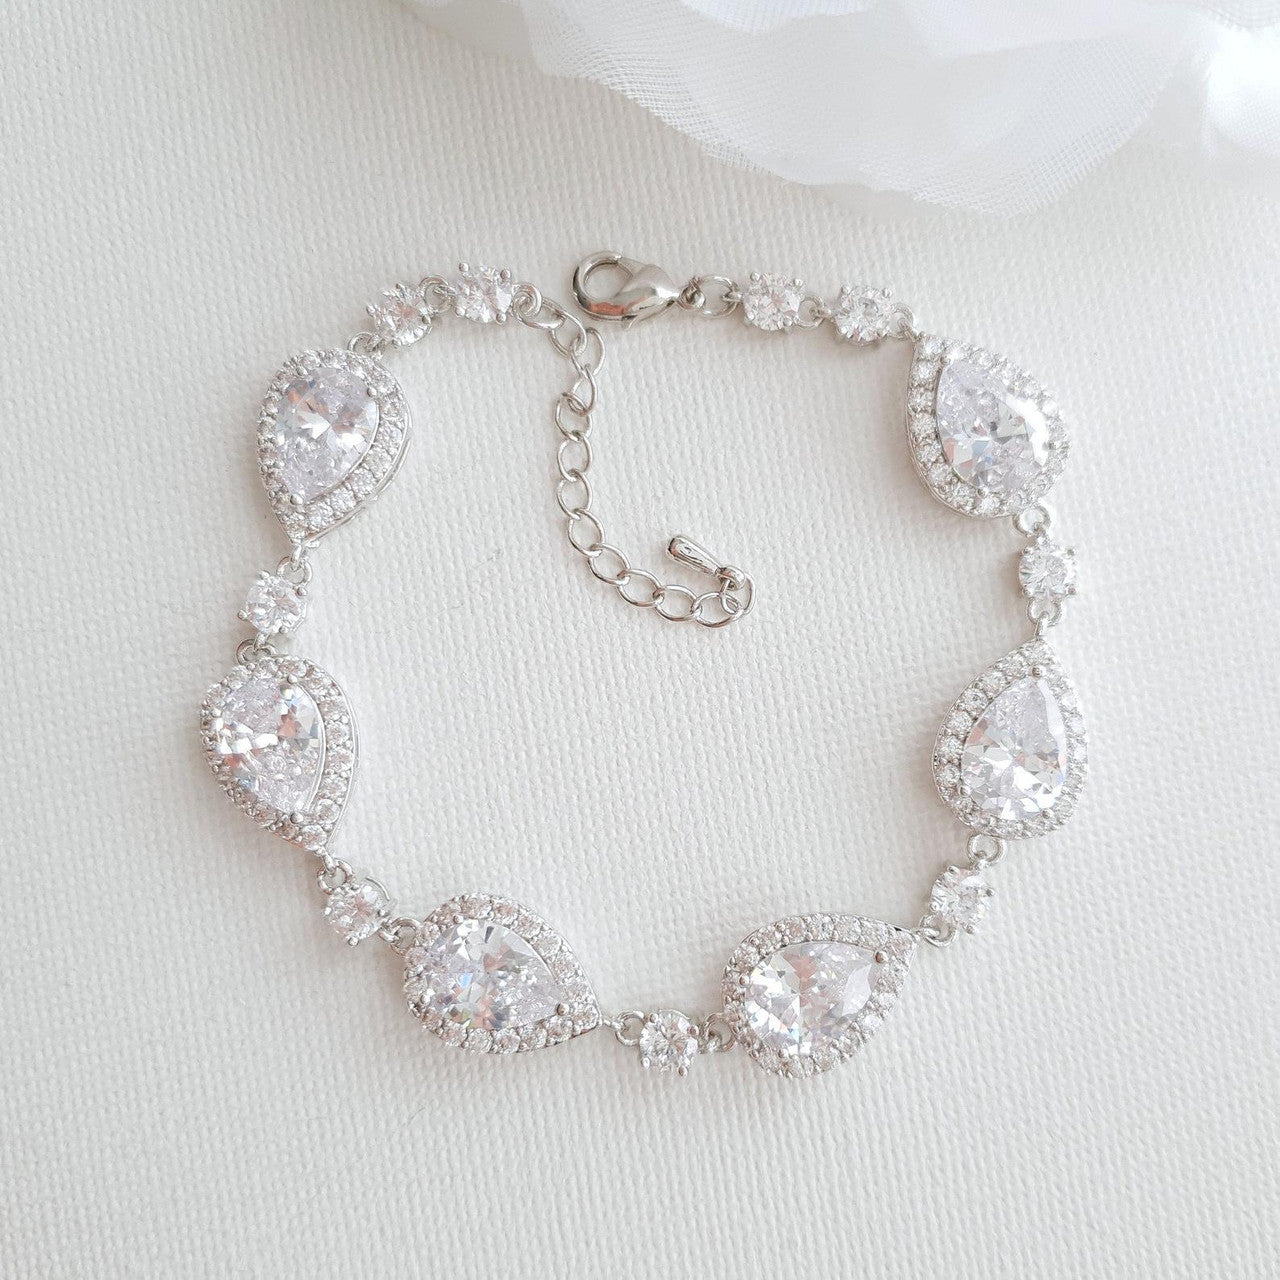 Wedding Bracelet for Brides in Teardrop Shape Cubic Zirconia Crystals-Emma